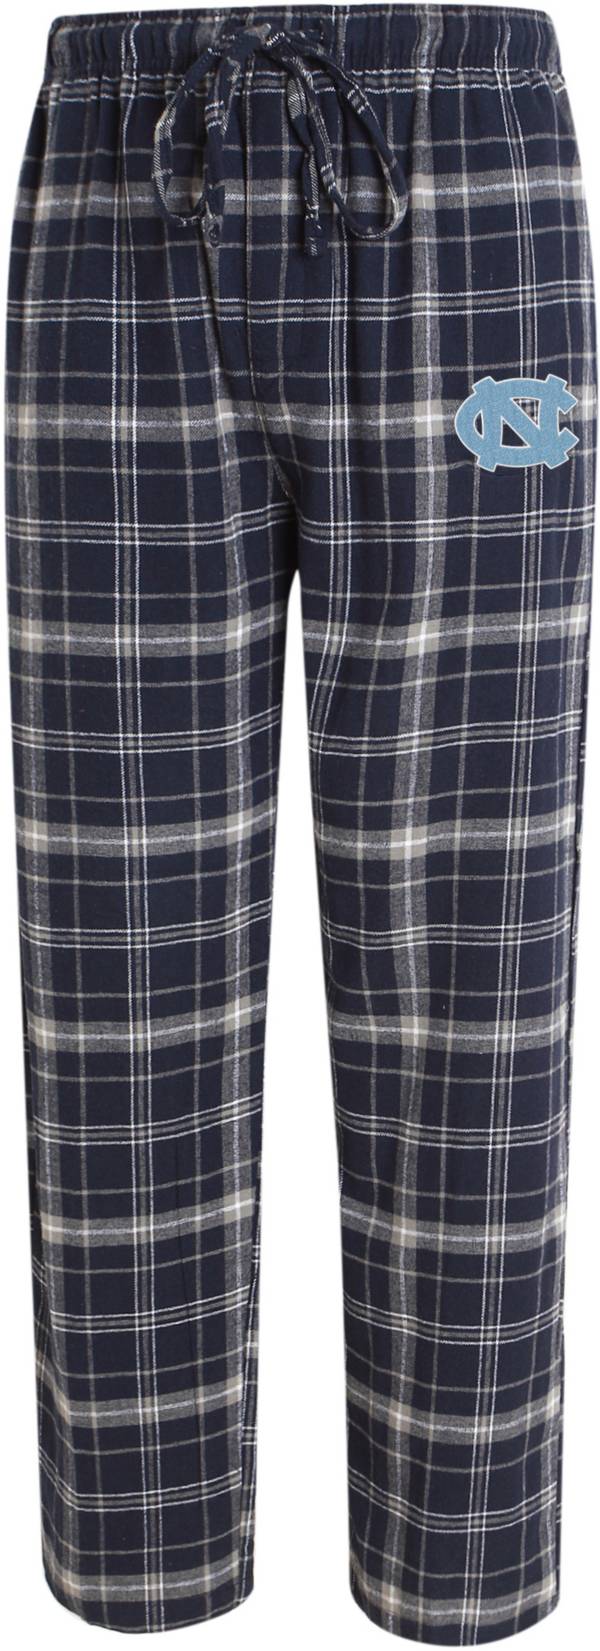 Profile Varsity Men's North Carolina Tar Heels Navy Plaid Sleep Pants – Big and Tall product image